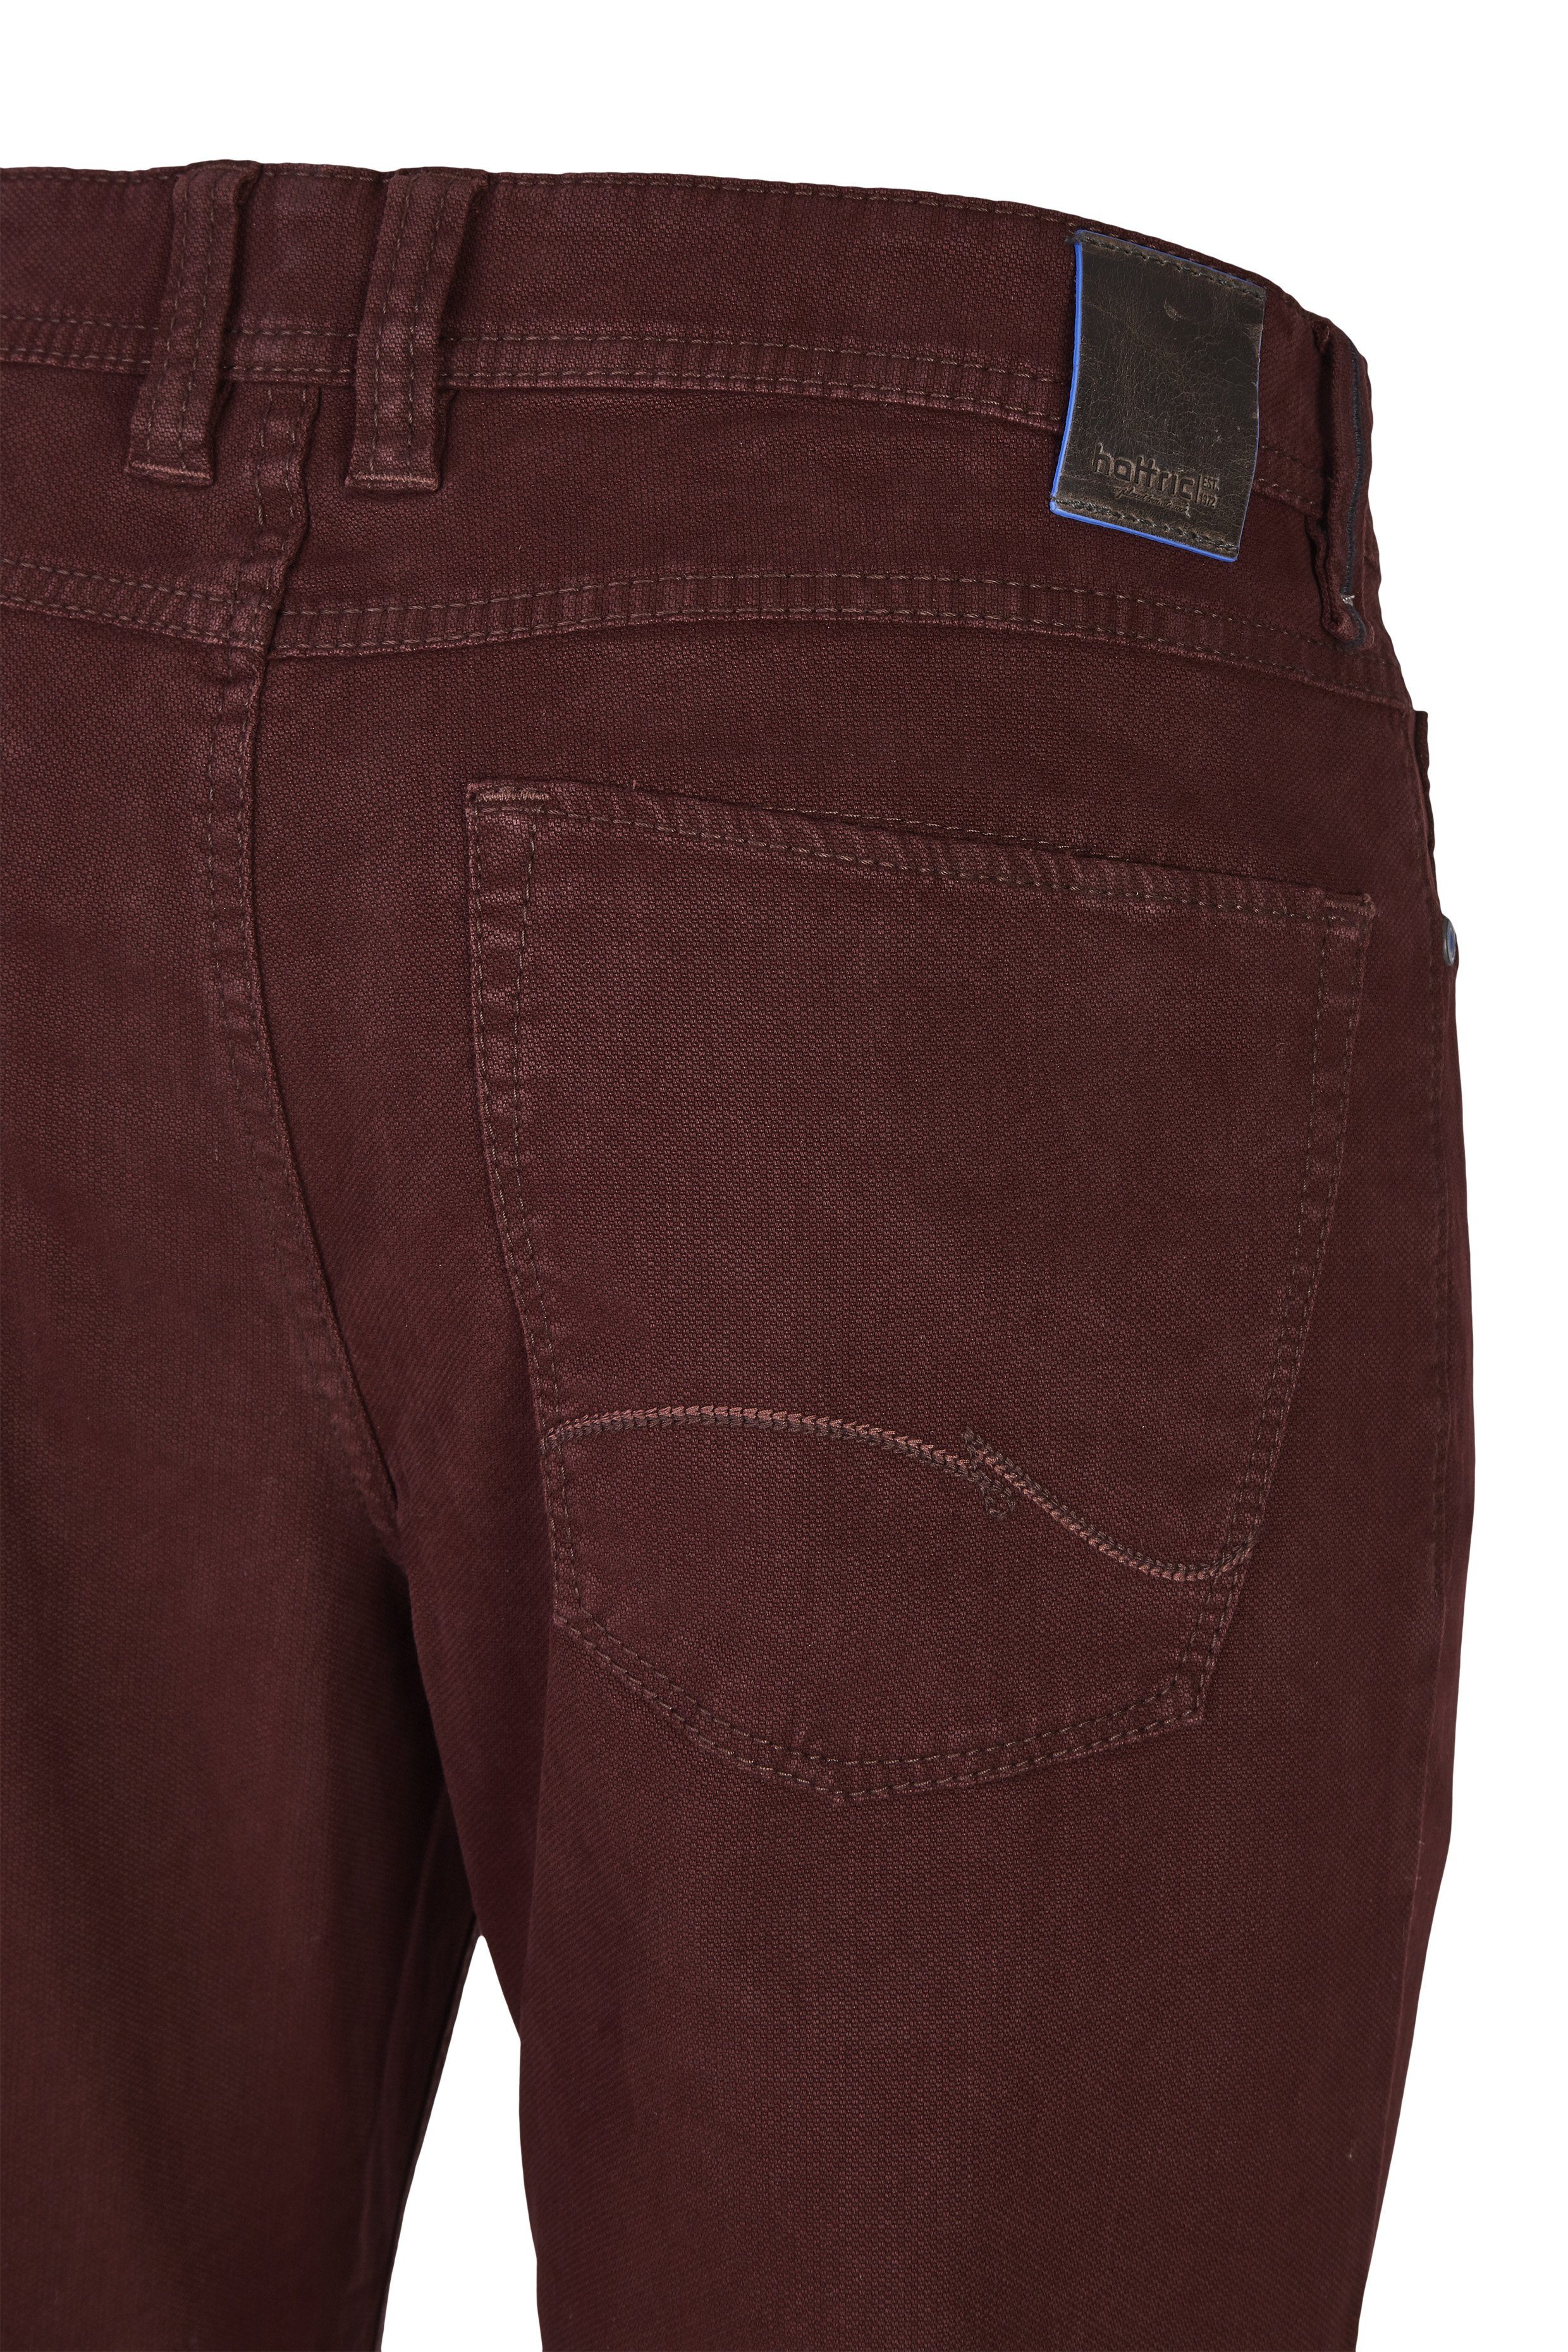 COSY HATTRIC red STRUCTURE HUNTER - 688955 6334.57 dark Hattric 5-Pocket-Jeans